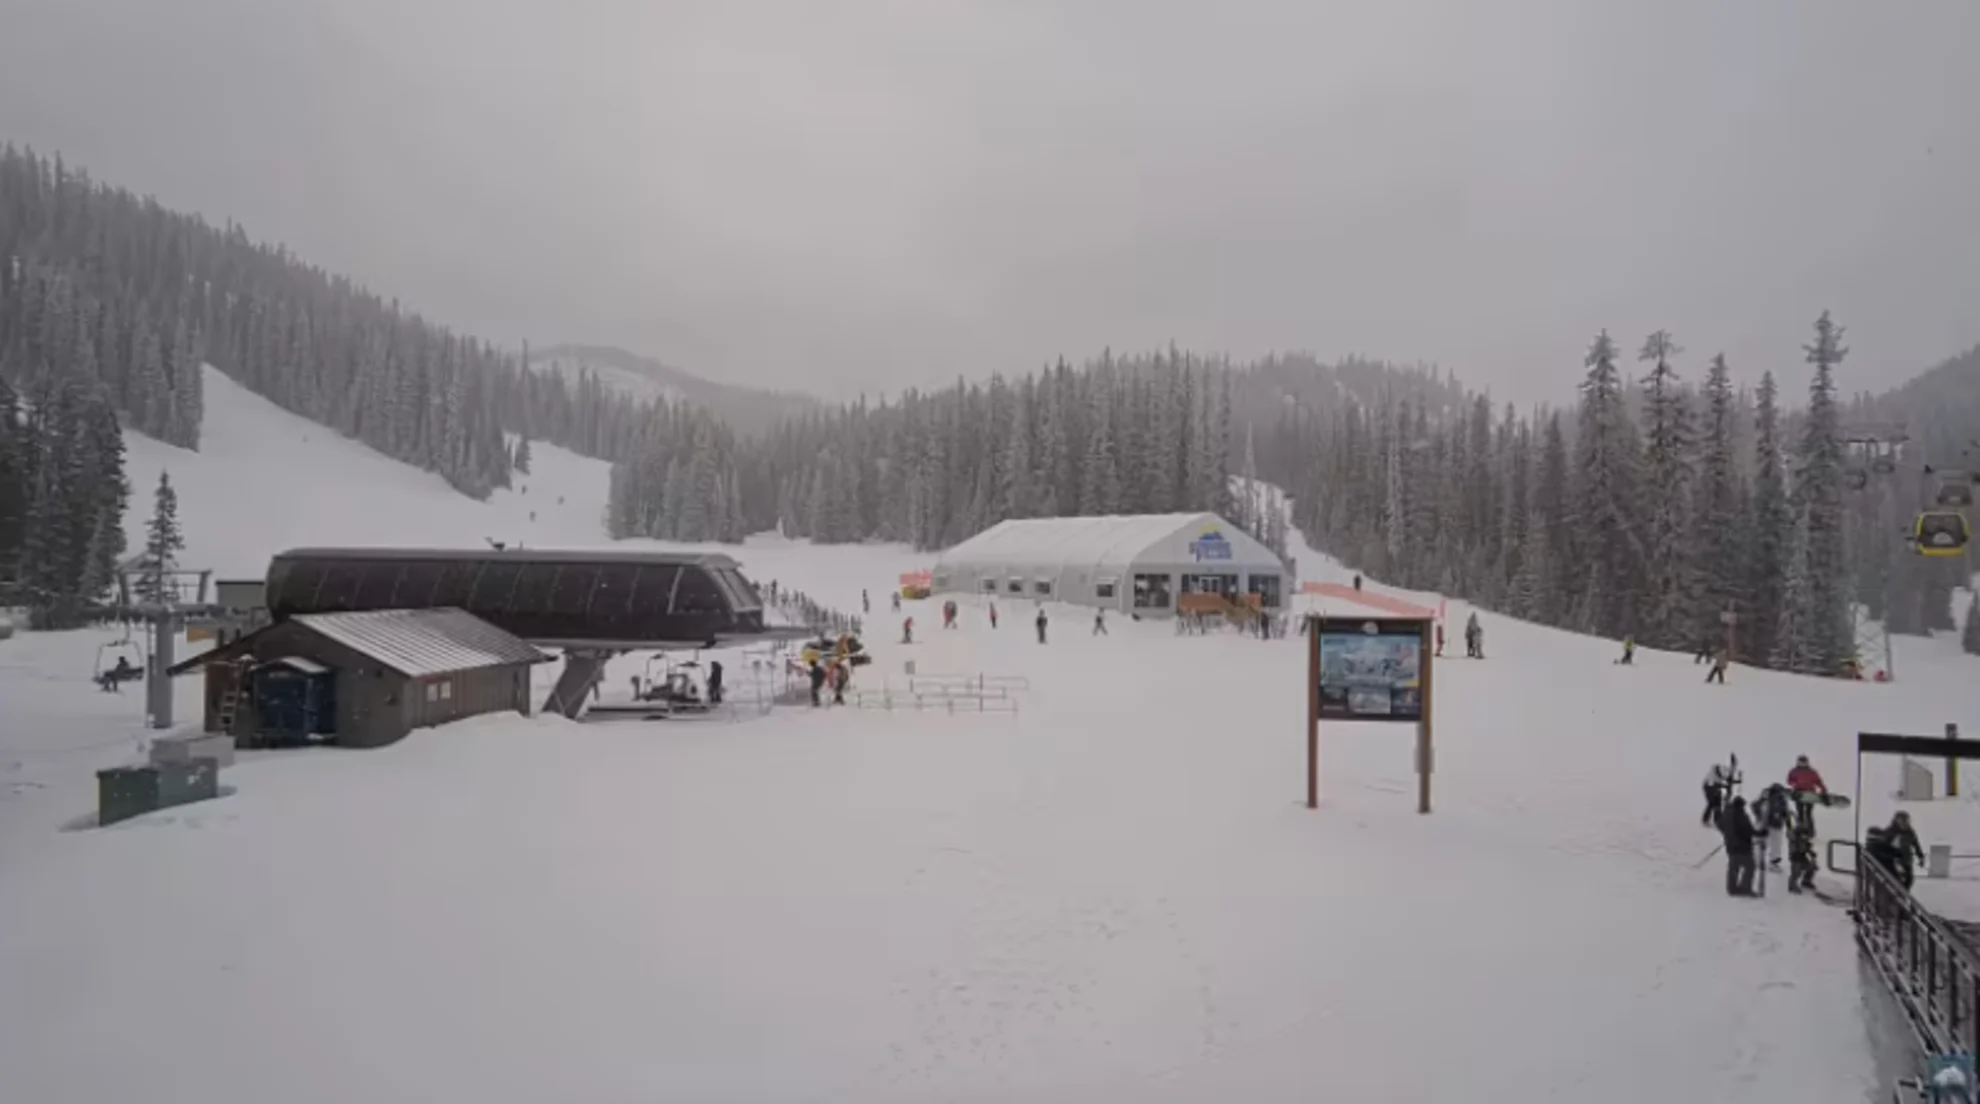 Ski hill staff rejoice as spring brings dump of snow to dry winter season